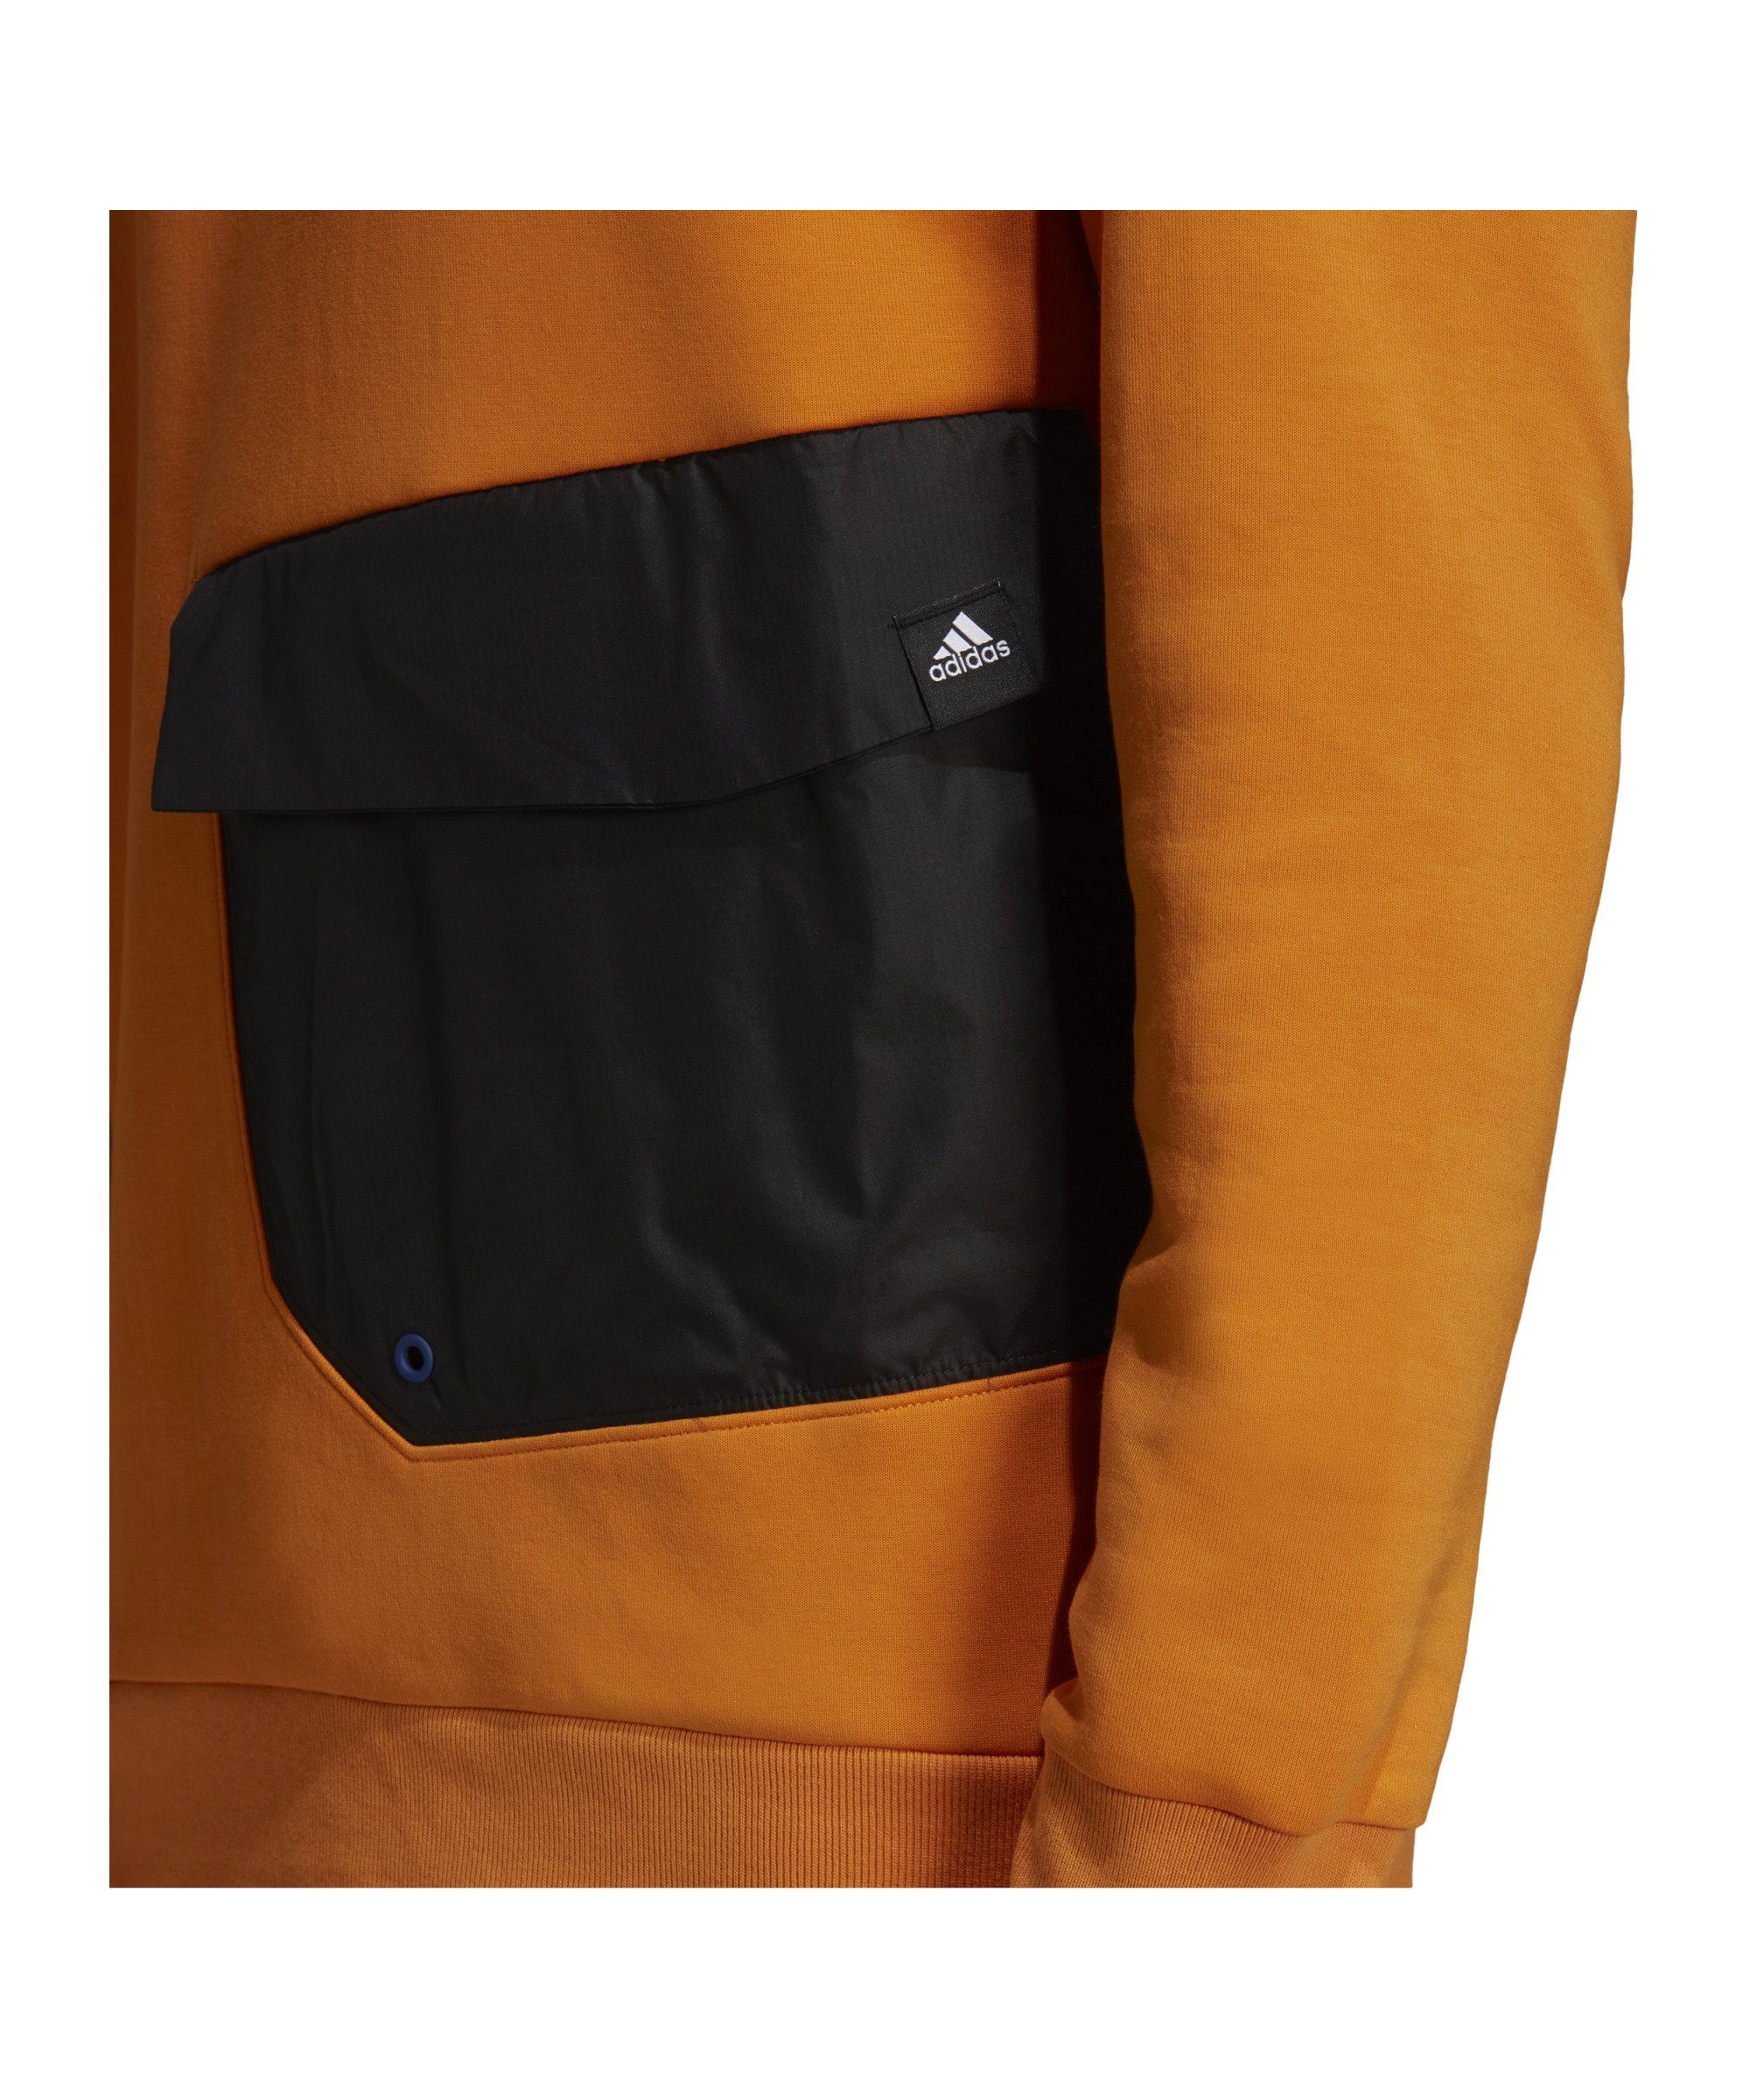 adidas Performance Sweatshirt Pocket Hoody gelbschwarz